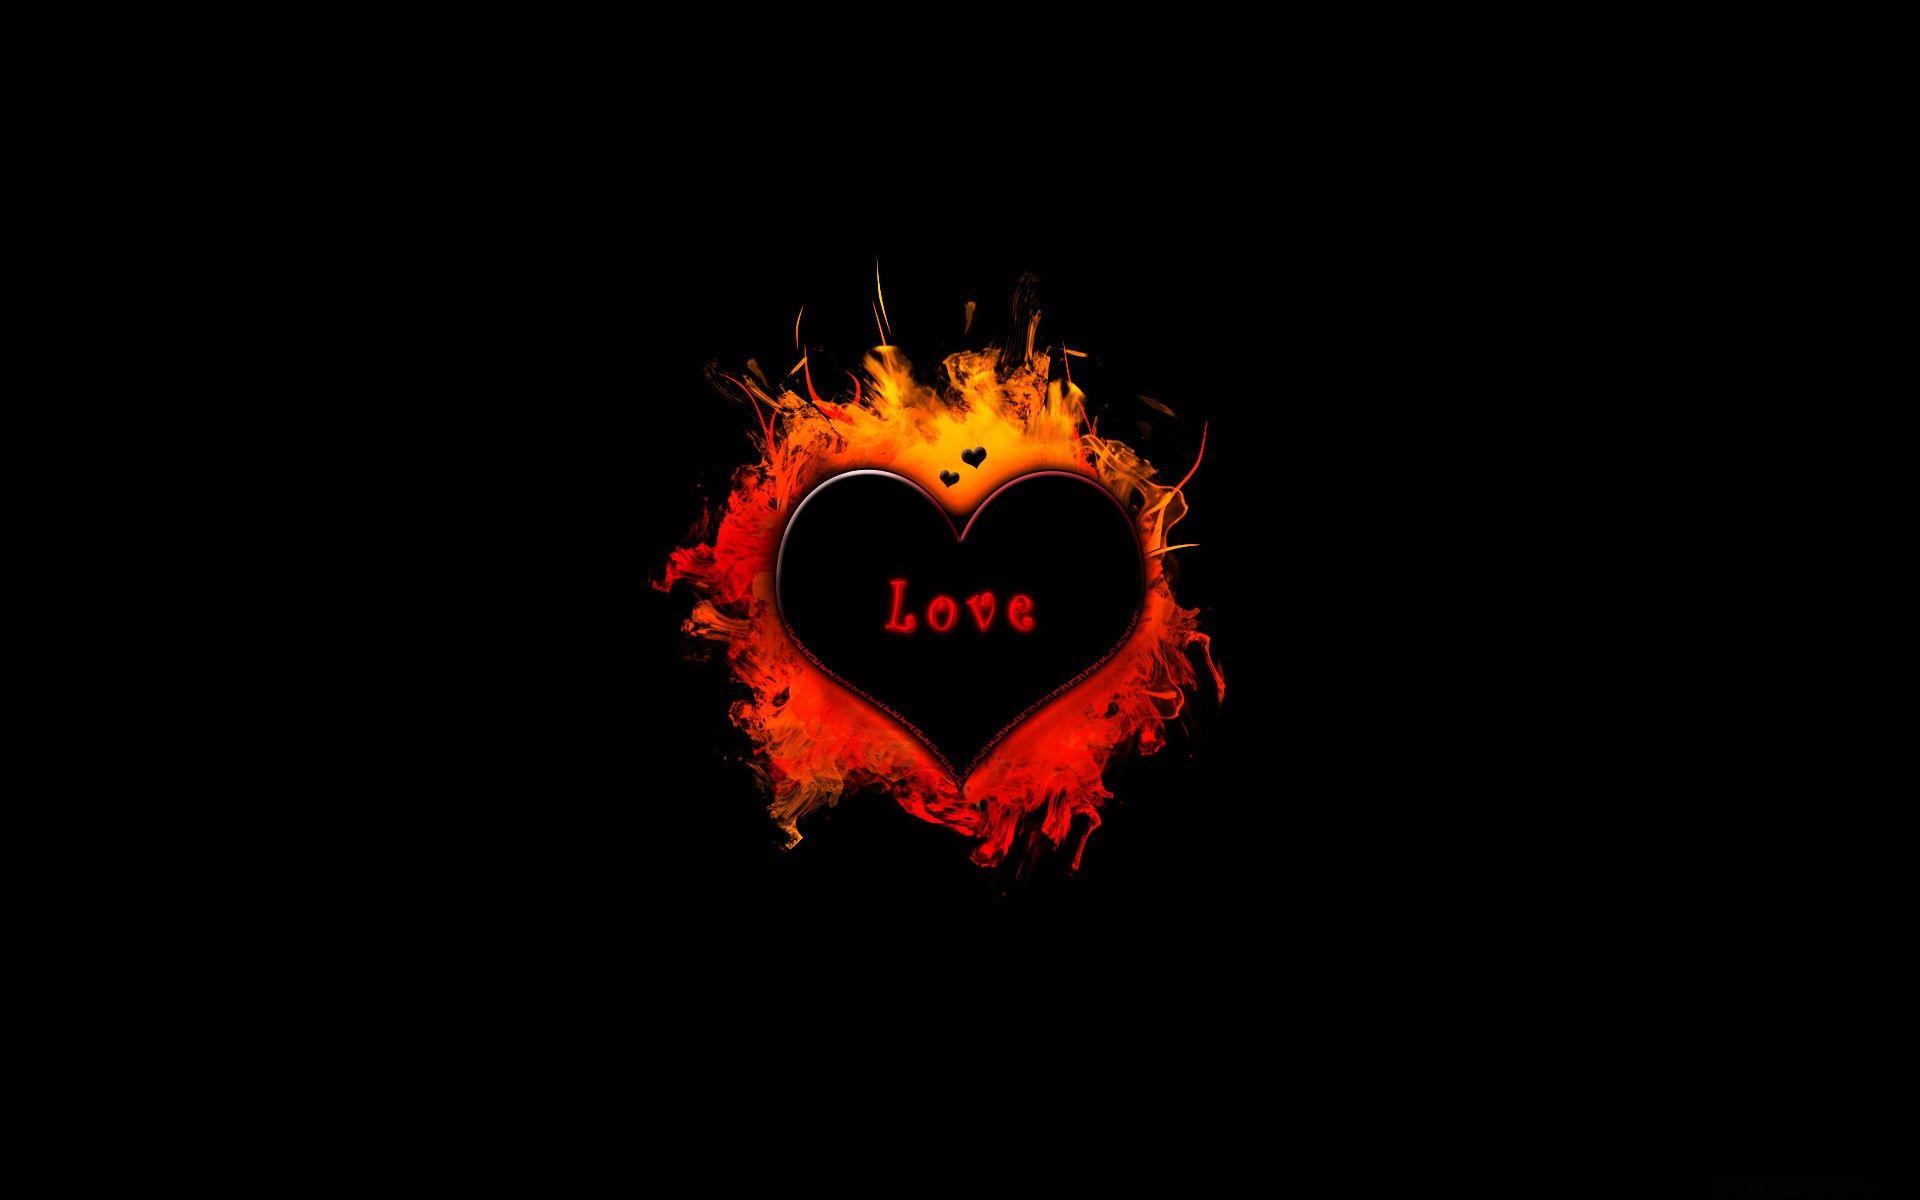 Download desktop wallpaper Love heart on a black background